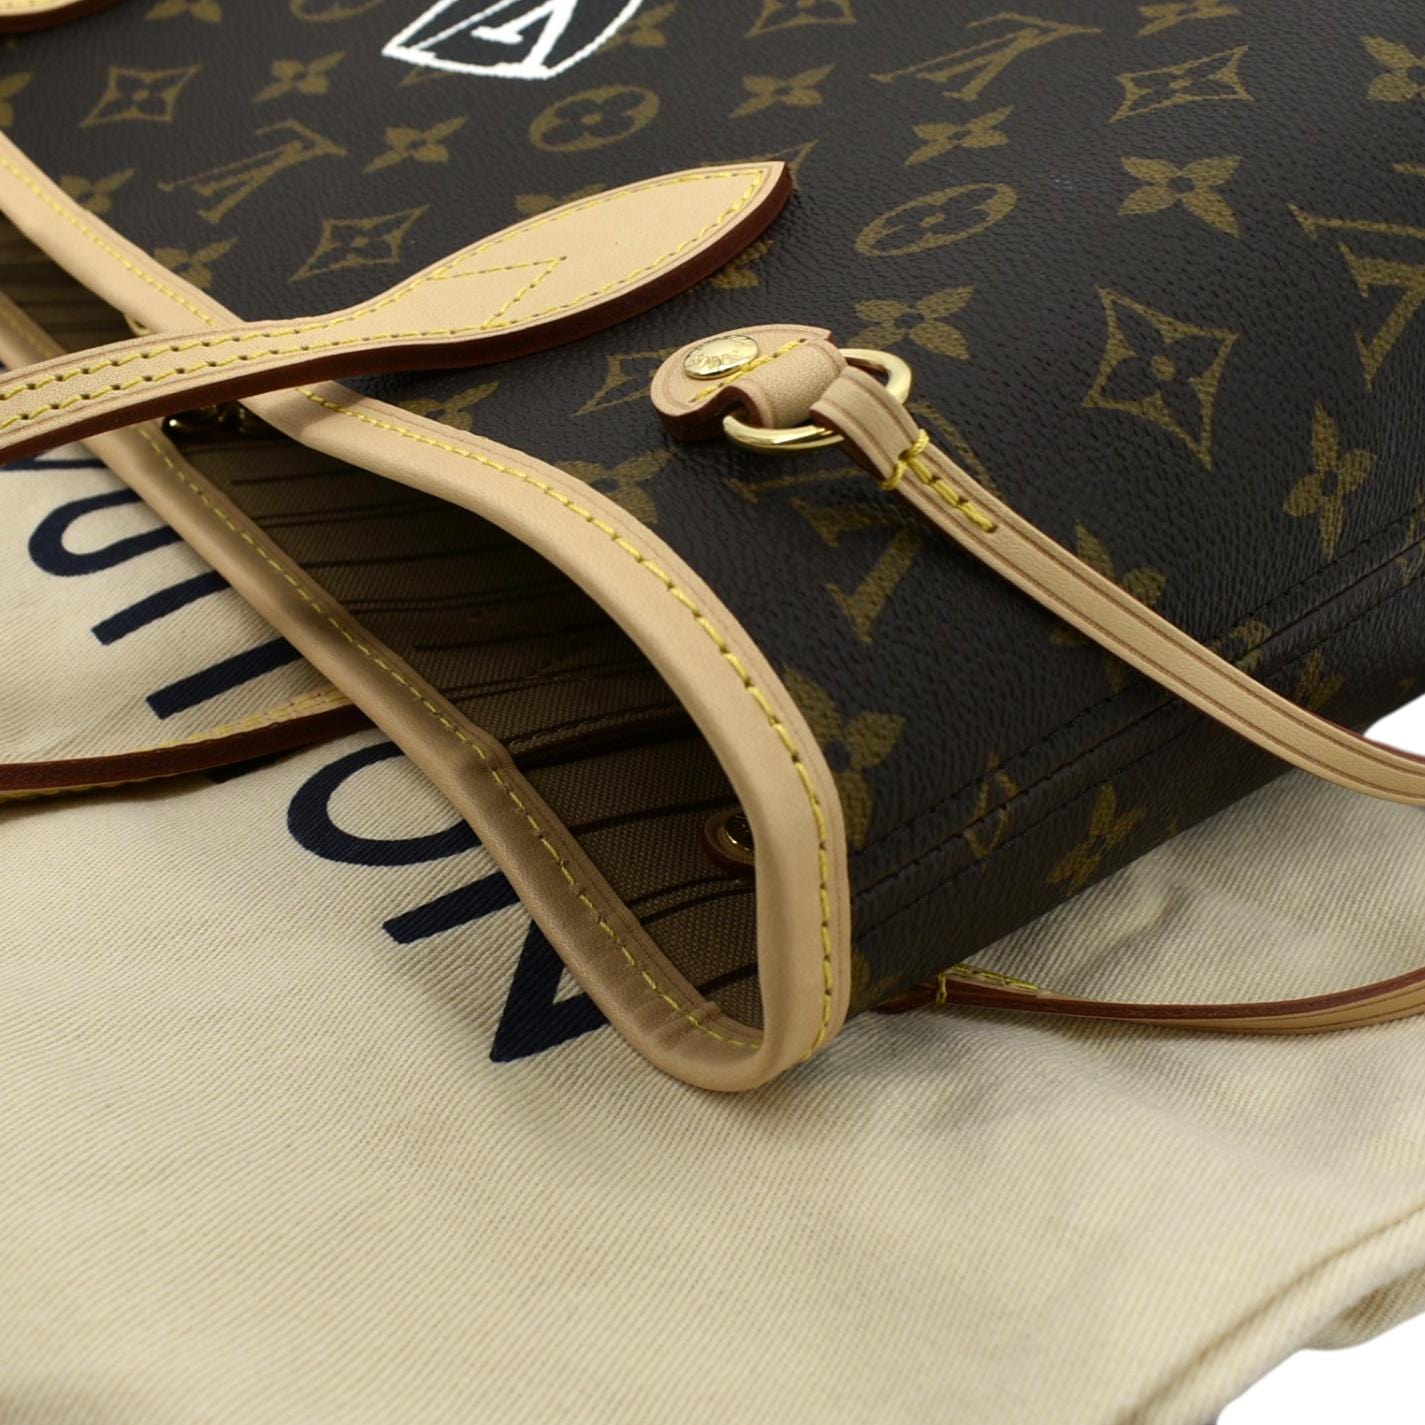 Handbags Louis Vuitton Louis Vuitton Handbag Neverfull PM Monogram with initials